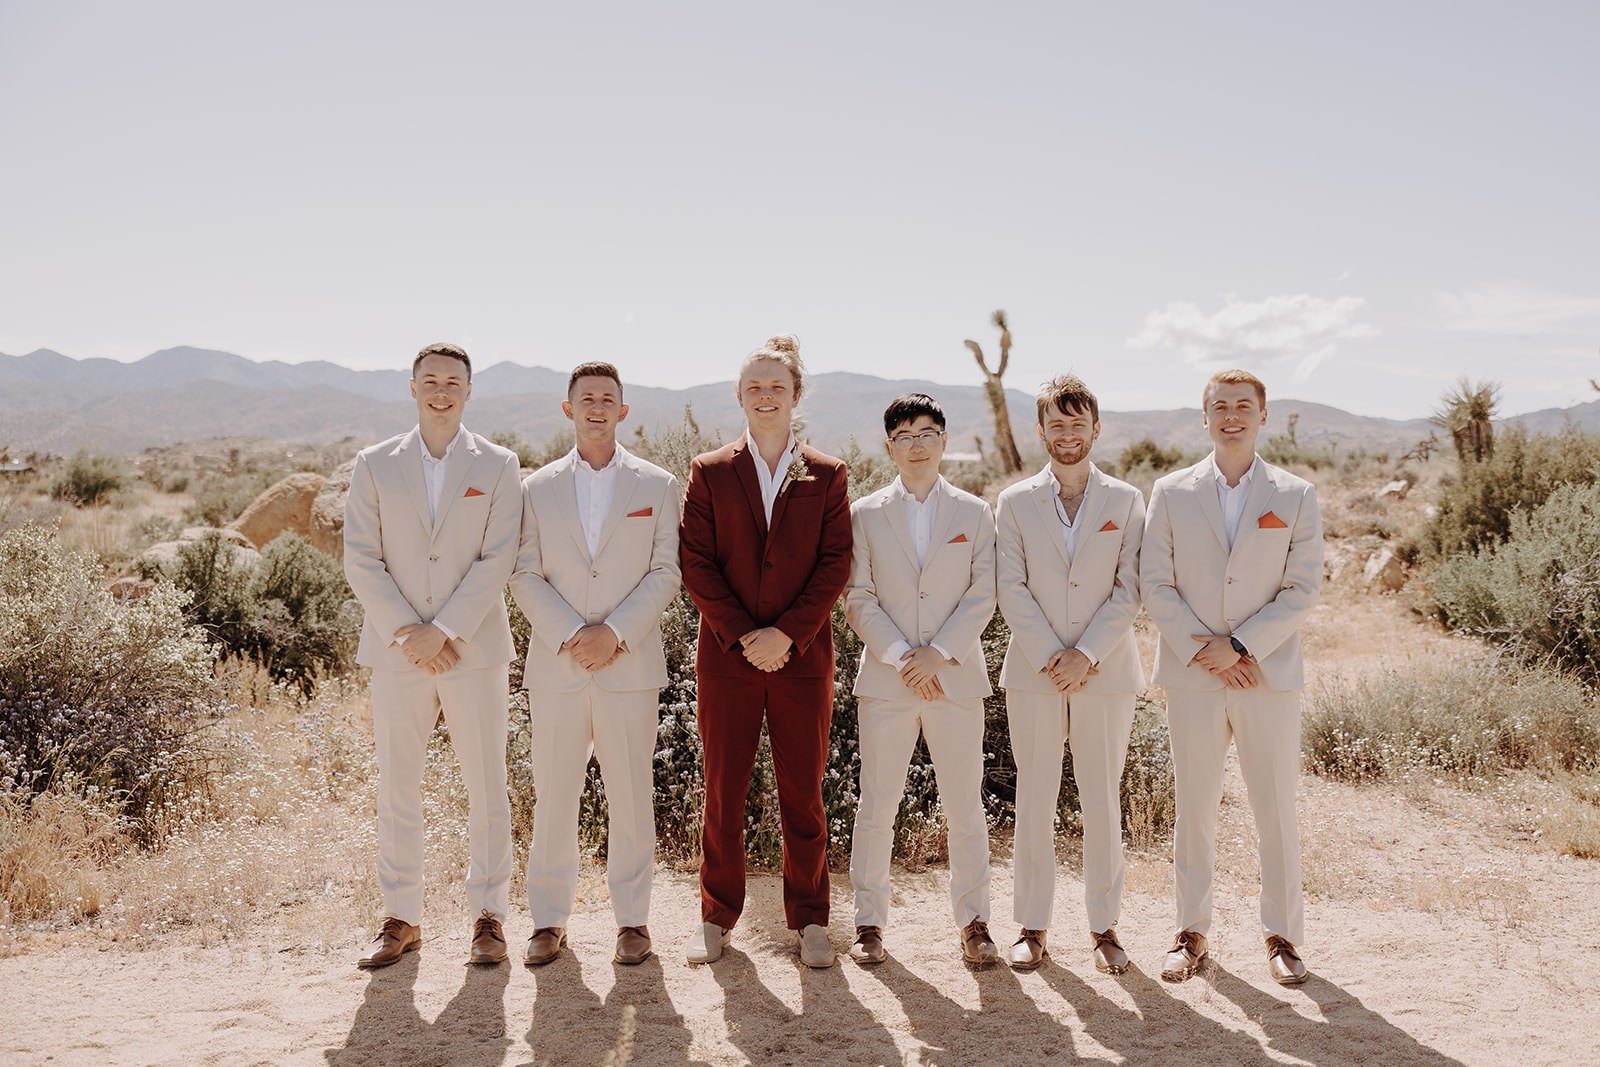 Groom wearing burgundy suit and groomsmen wearing light beige suits for wedding party photos in Joshua Tree